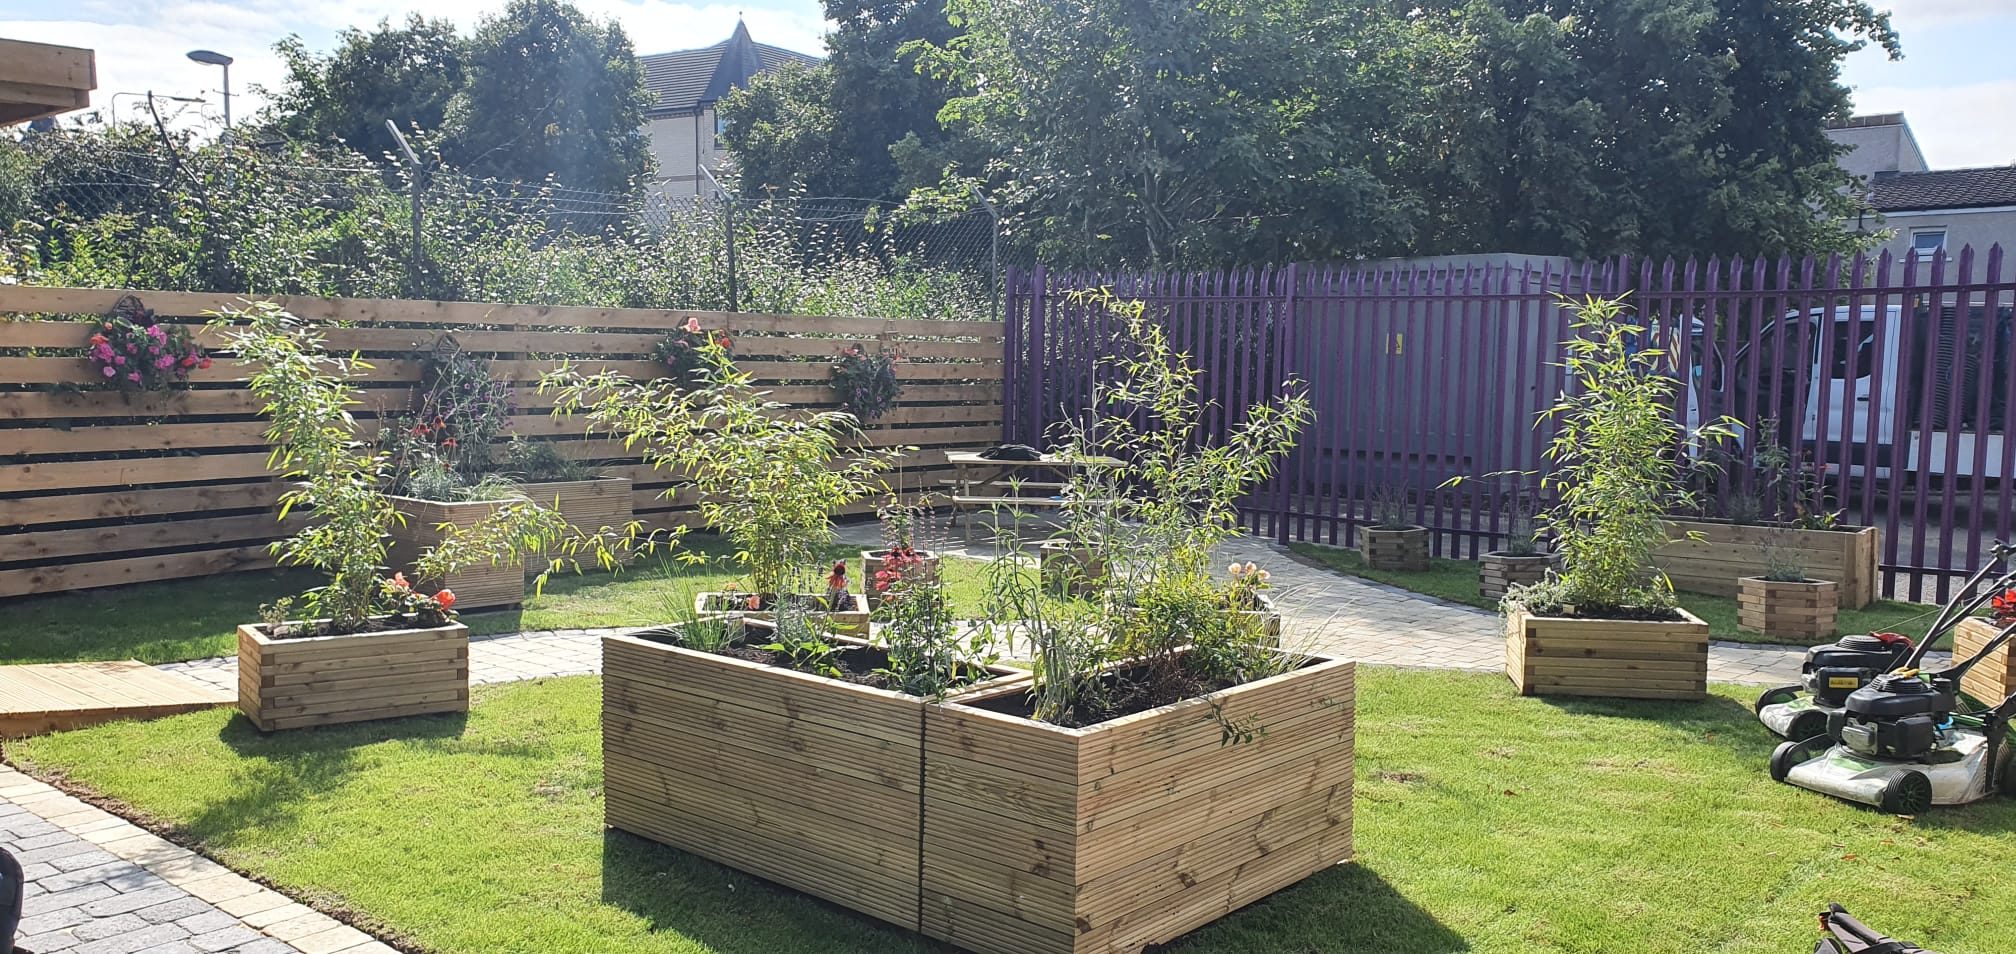 In Pictures: Priory Bridge Landscaping installs wellbeing garden for Epilepsy Scotland